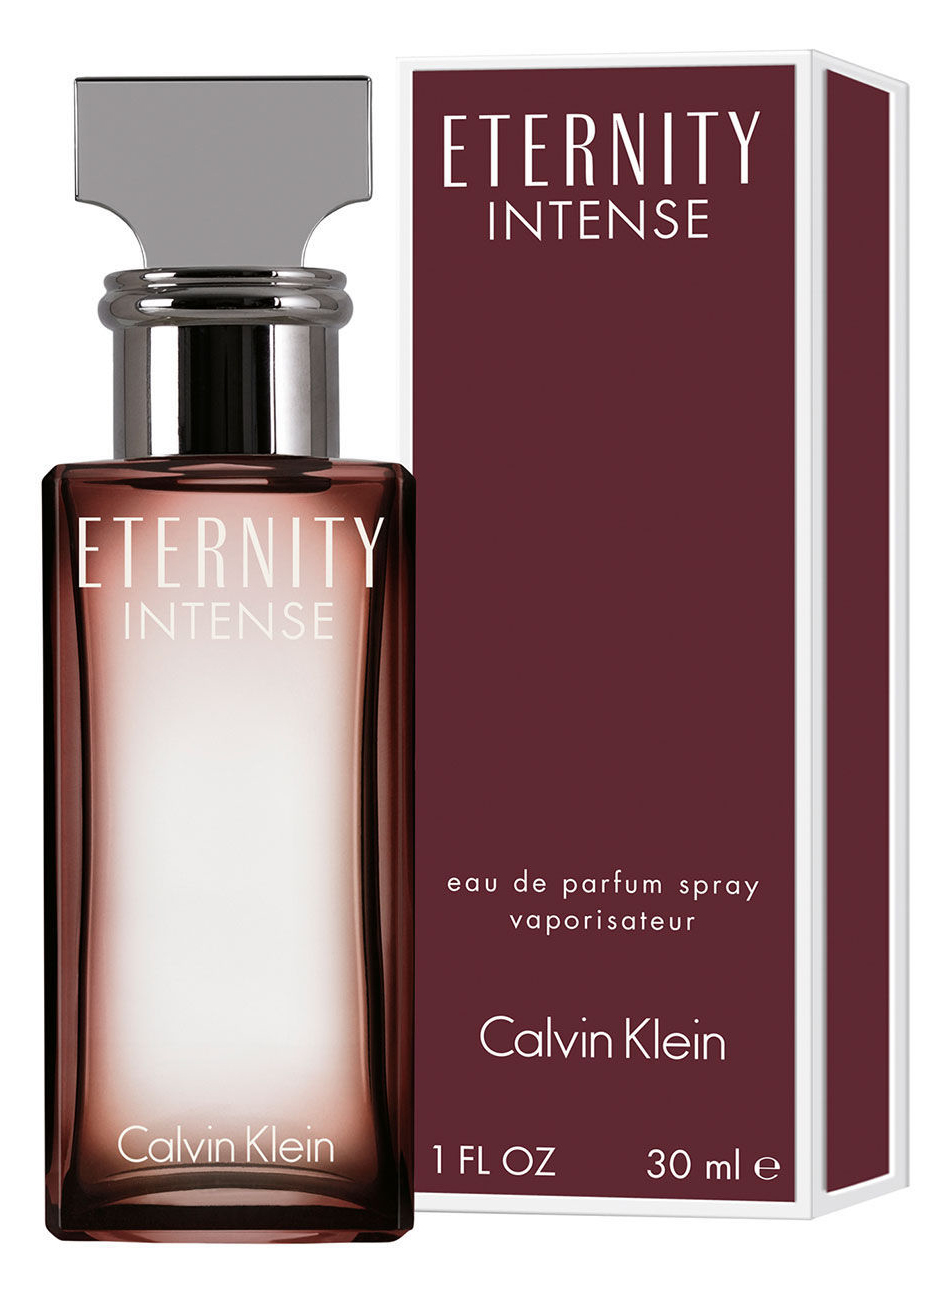 Calvin Klein Eternity Intense | Fehily’s